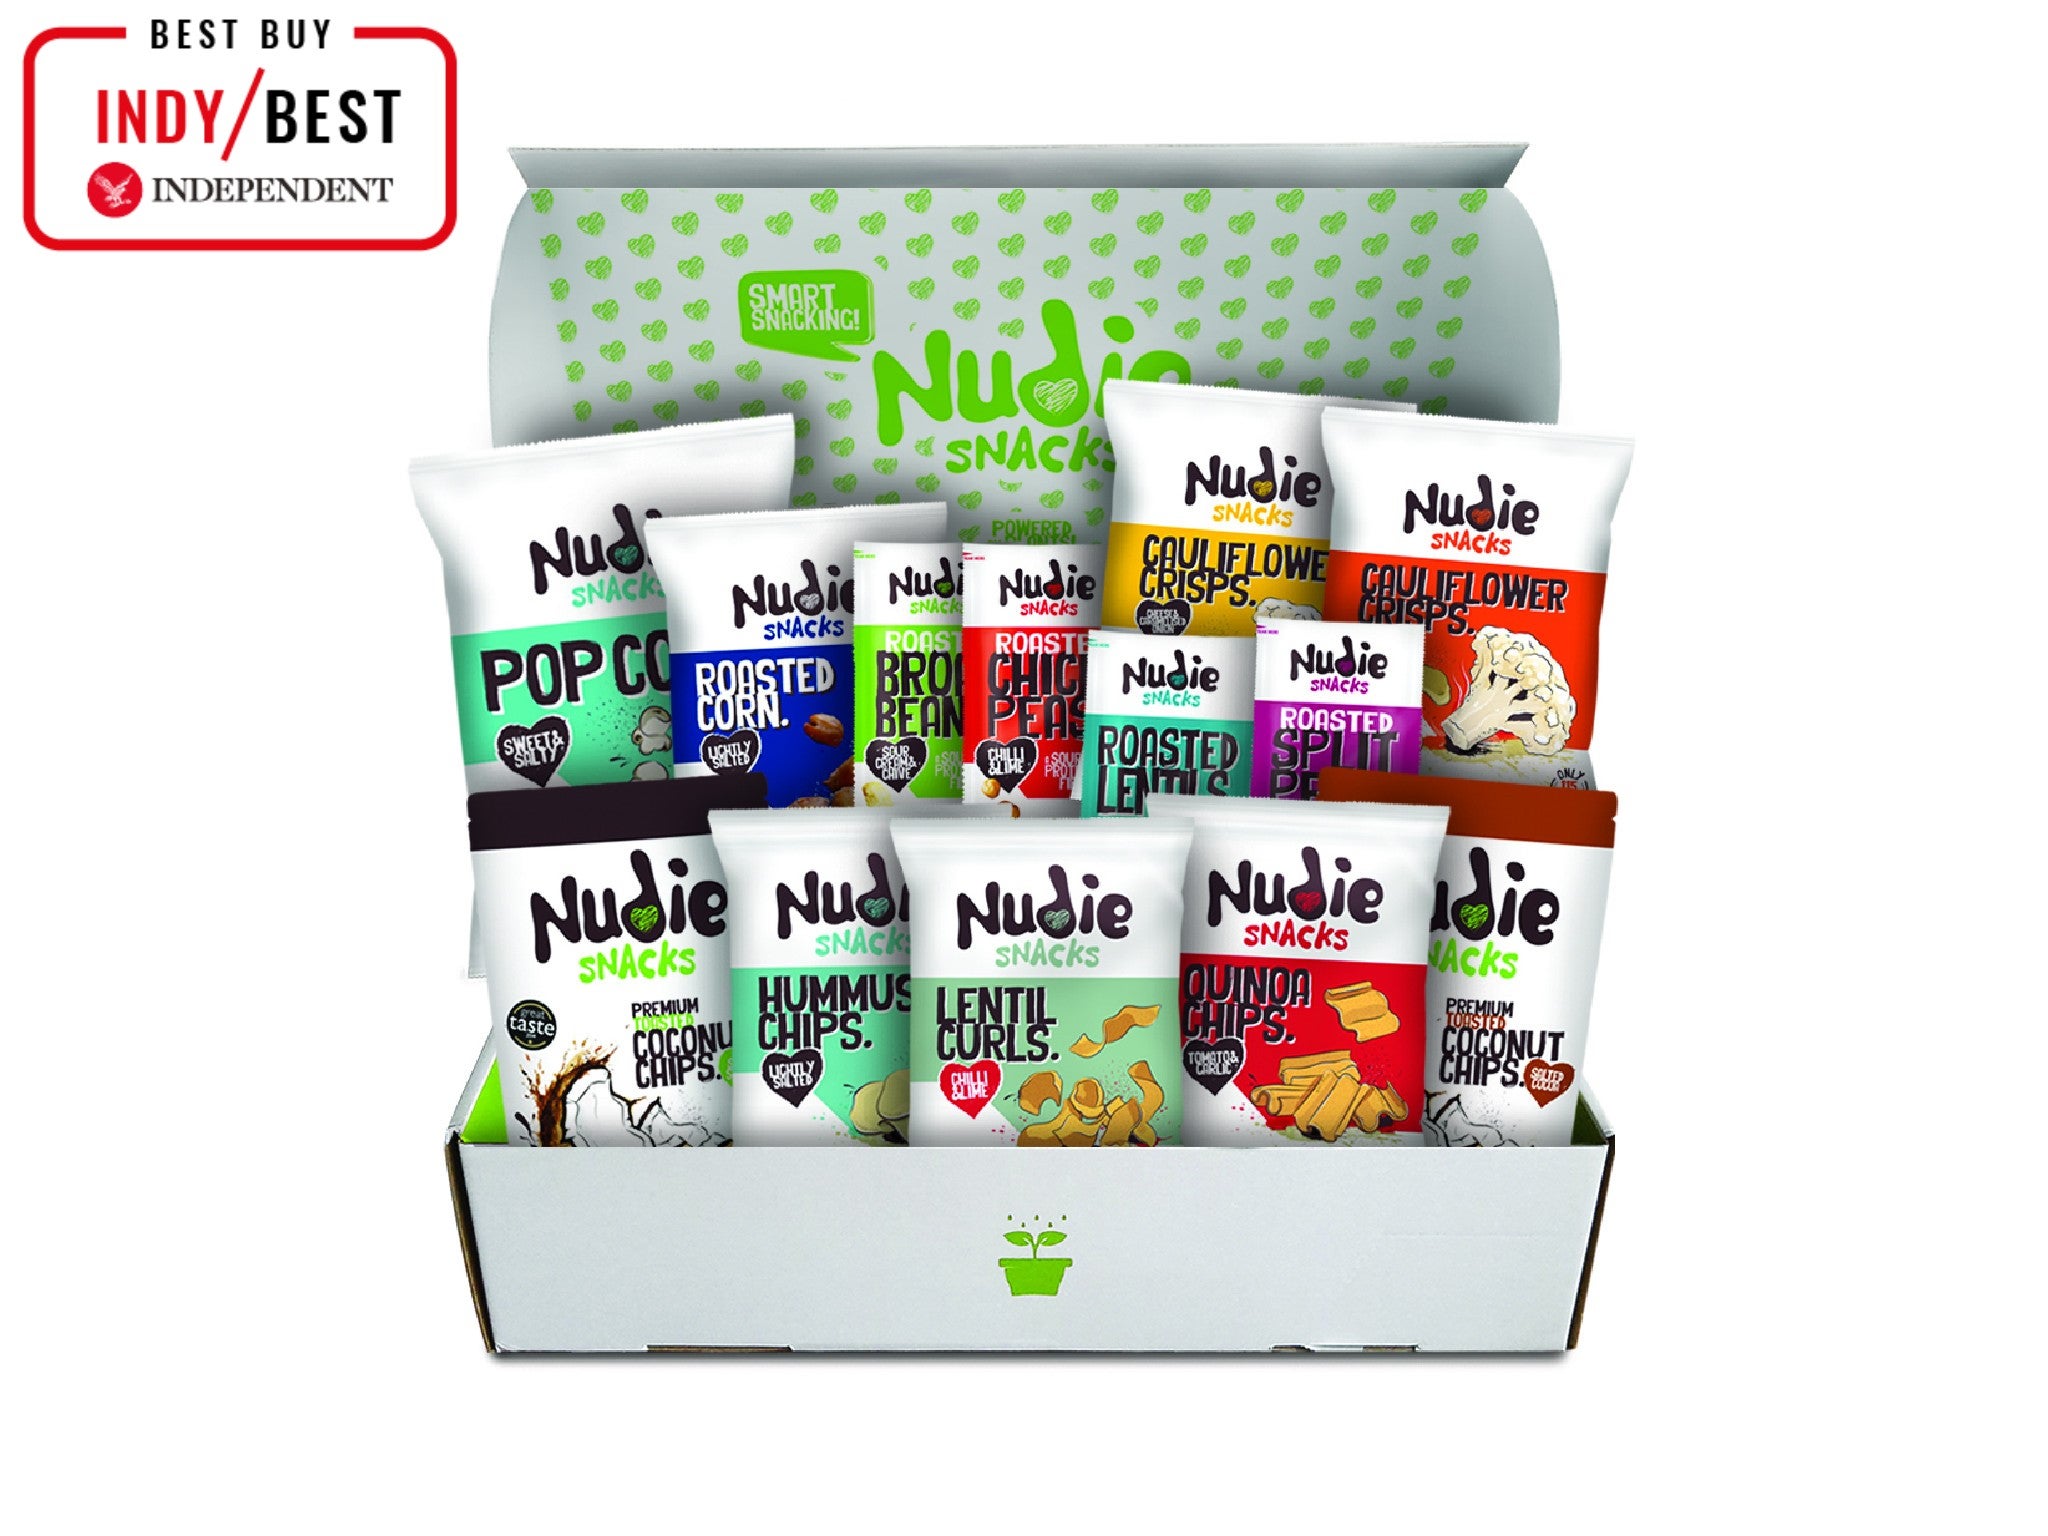 Nudie Snacks Big Night In snack box